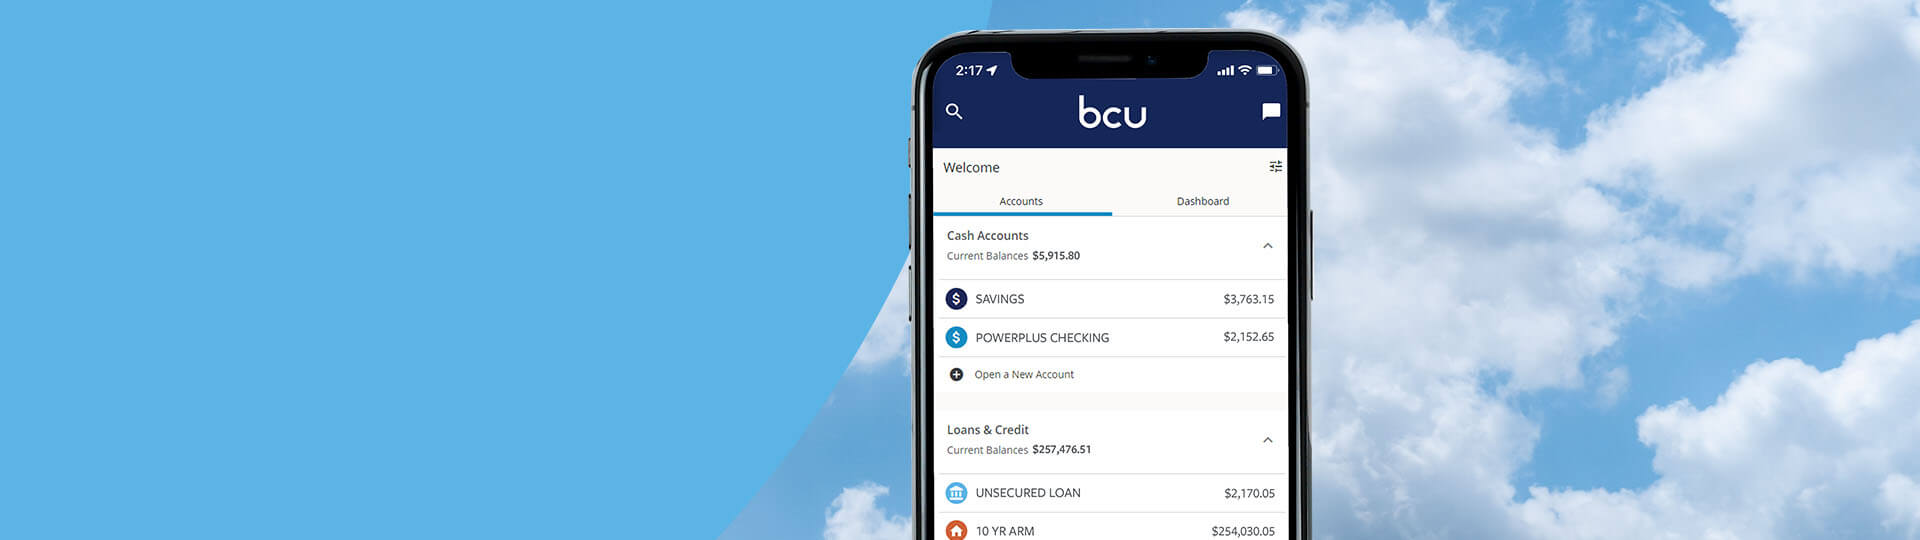 new digital banking app is here